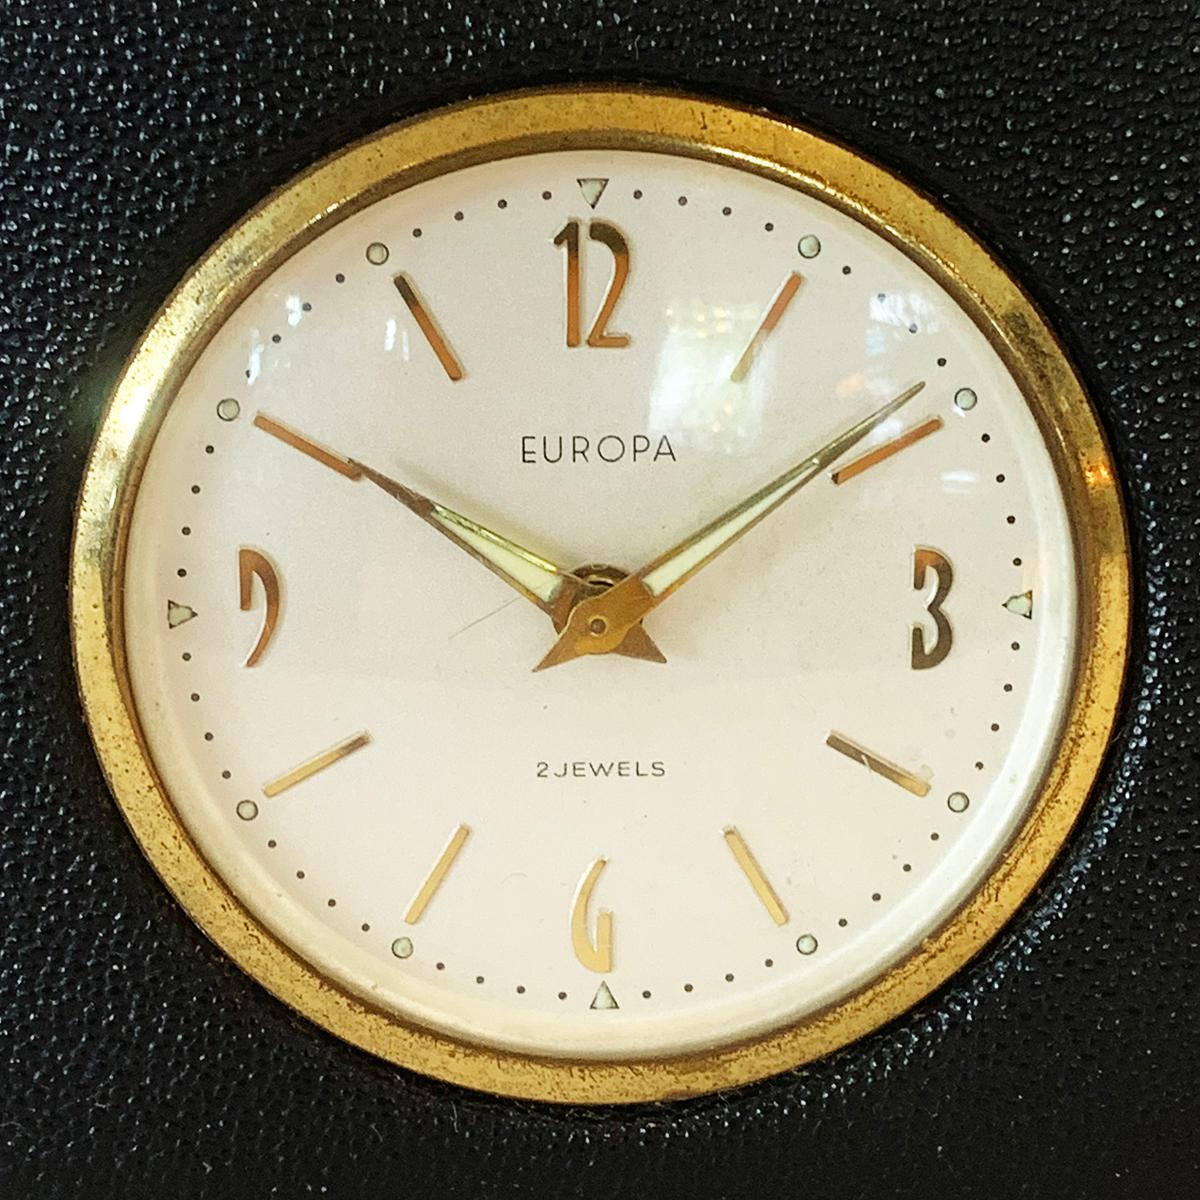 europa watch company